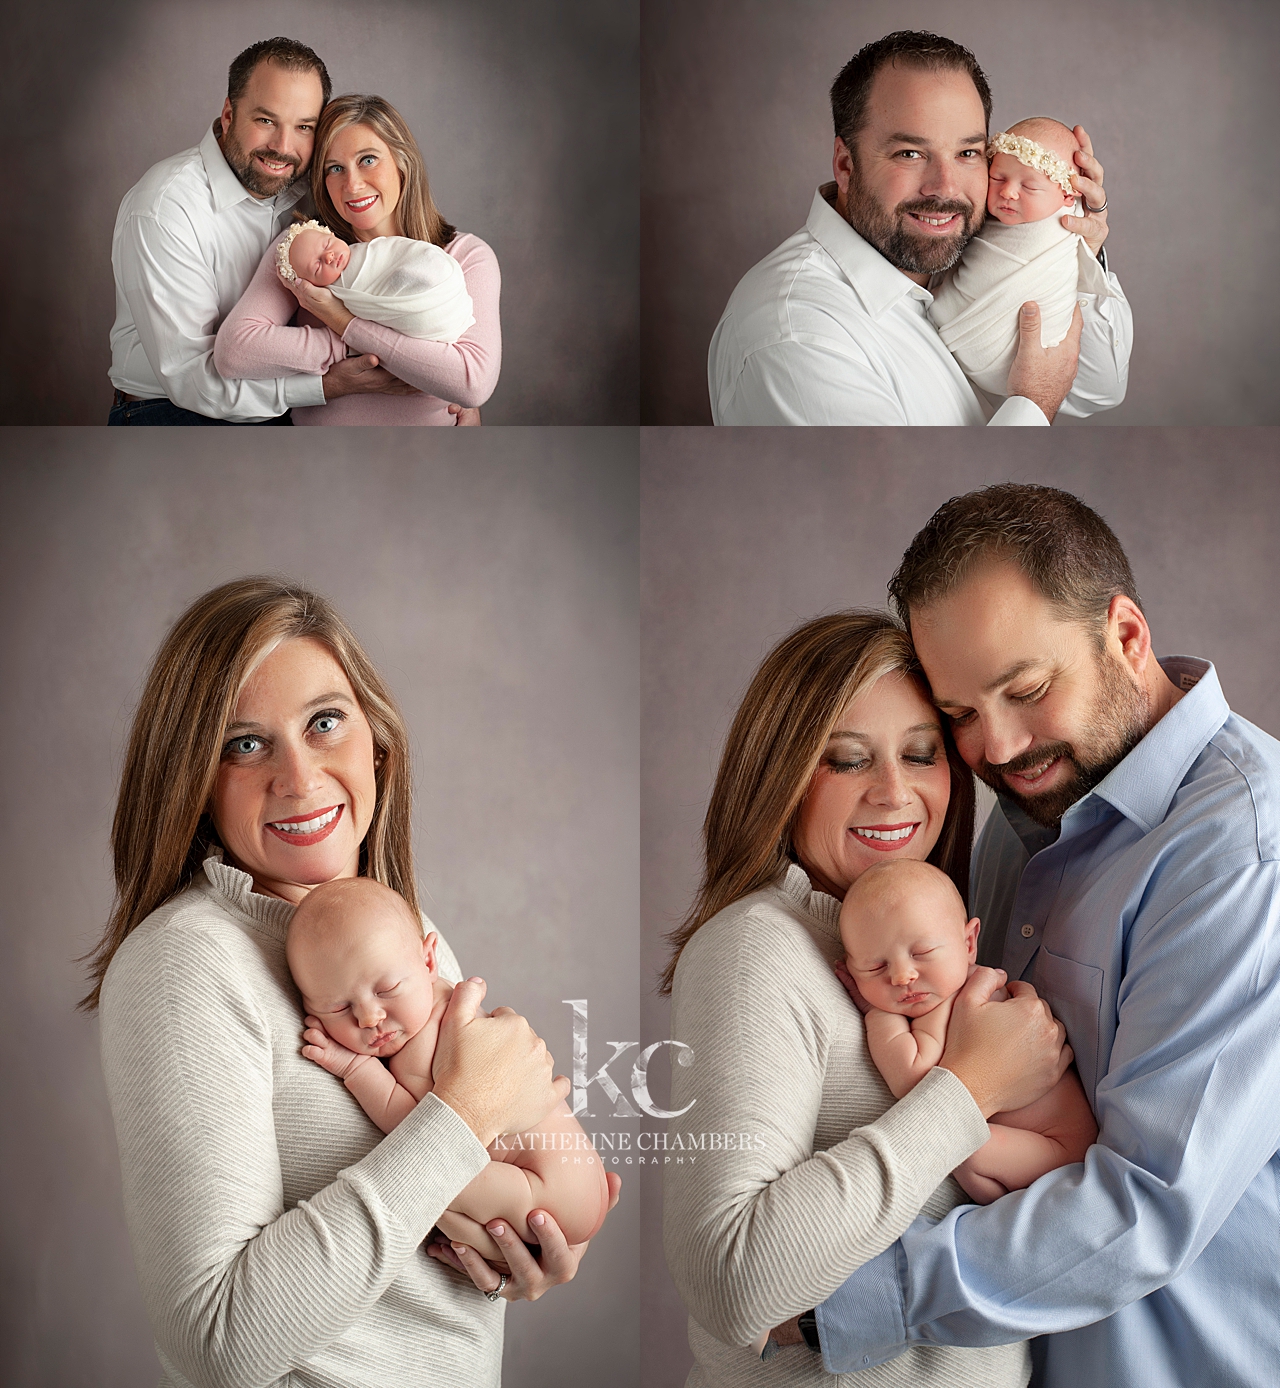 Newborn Photography in Cleveland Ohio | Adoption Story